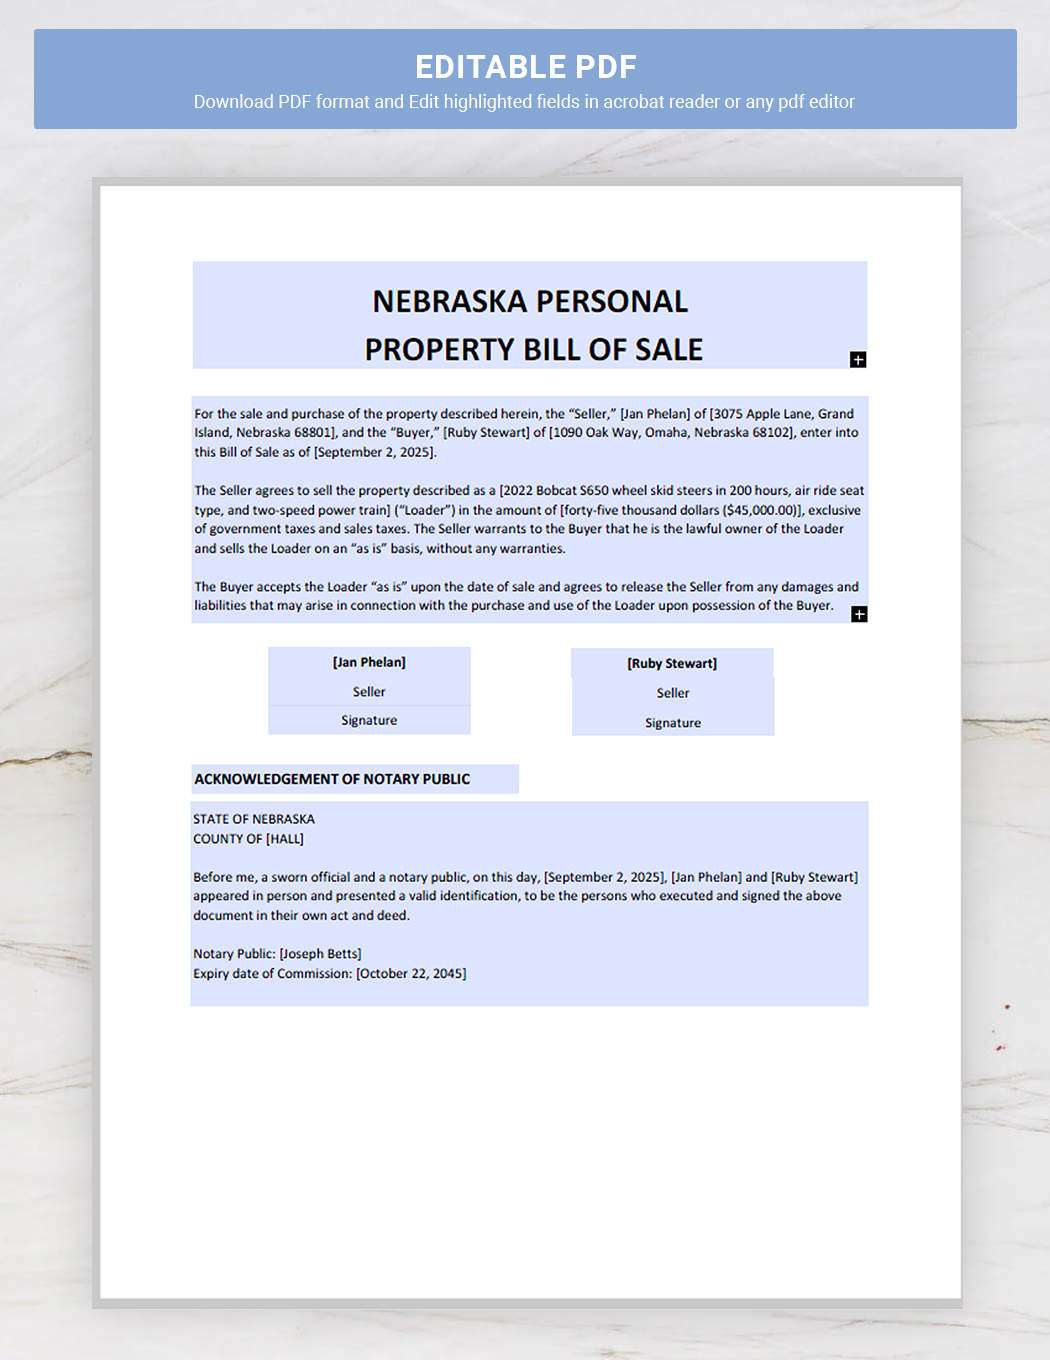 Nebraska Personal Property Bill of Sale Template